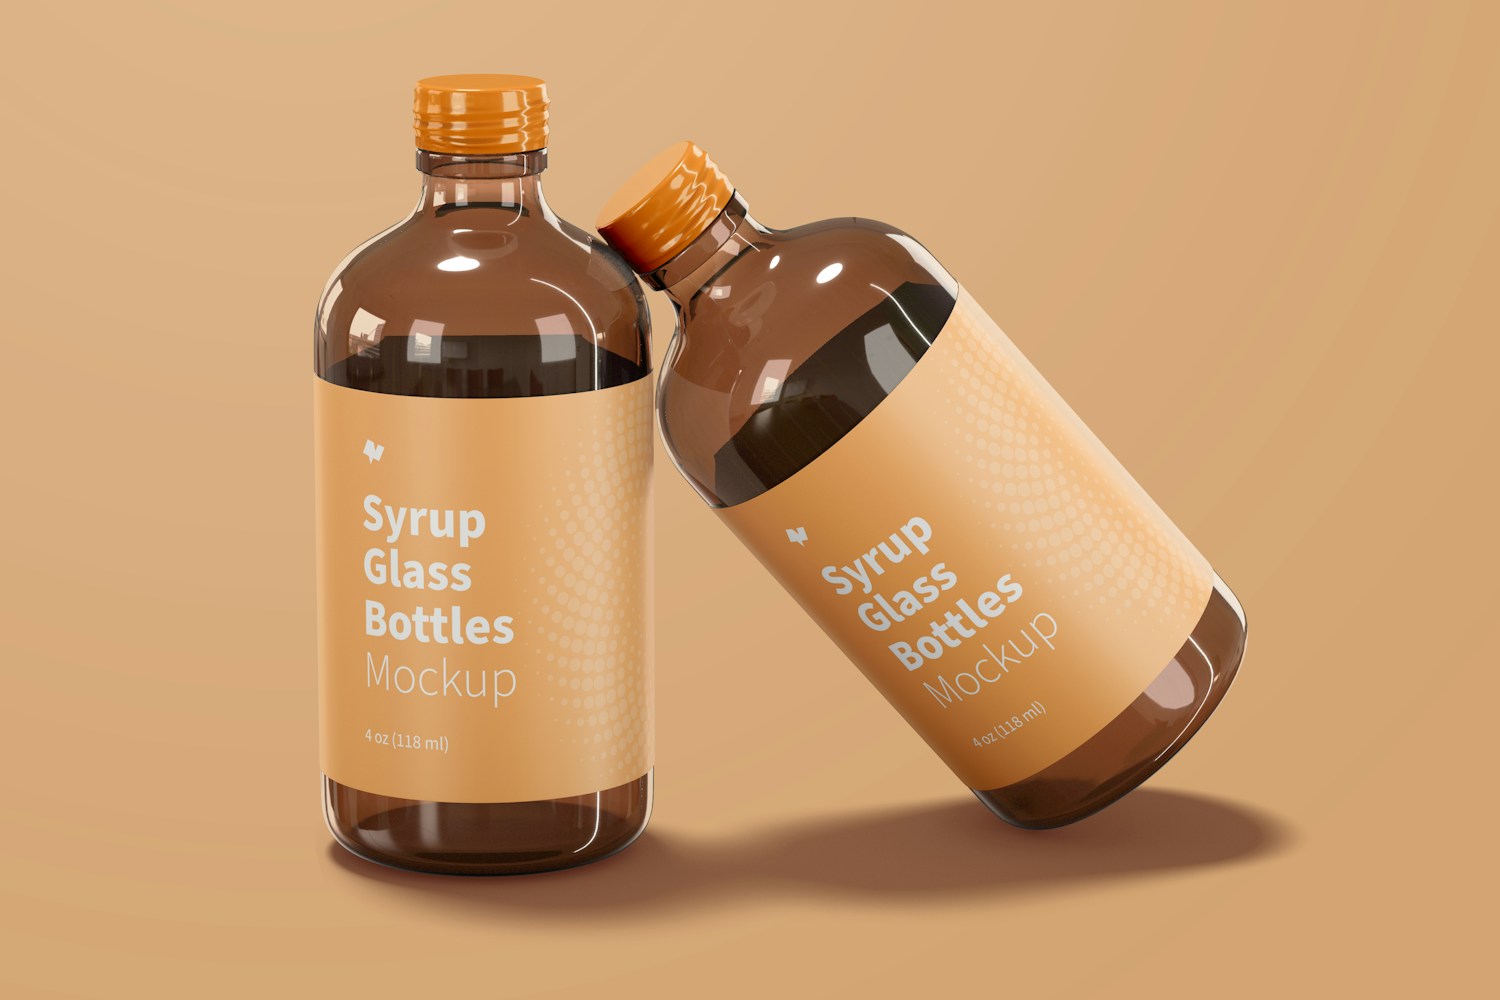 4 oz Syrup Glass Bottles Mockup